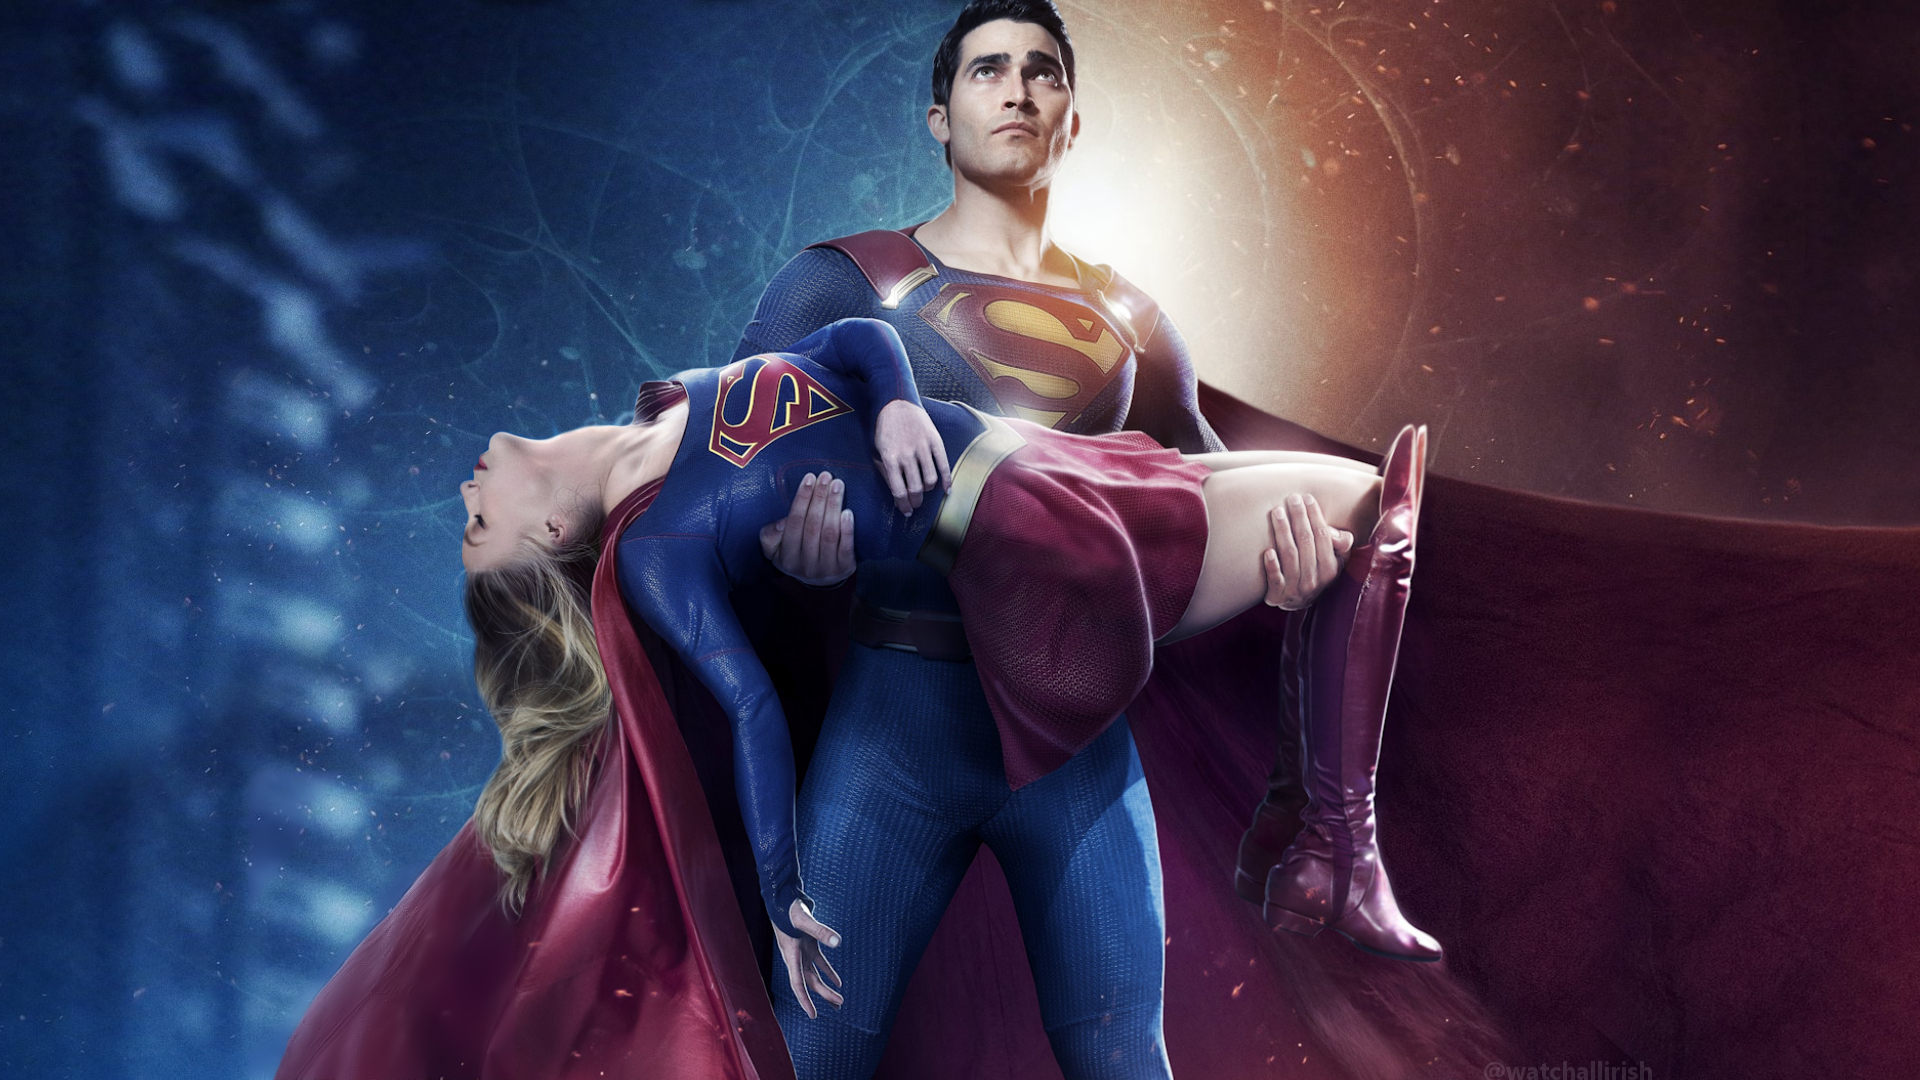 Supergirl Season Two